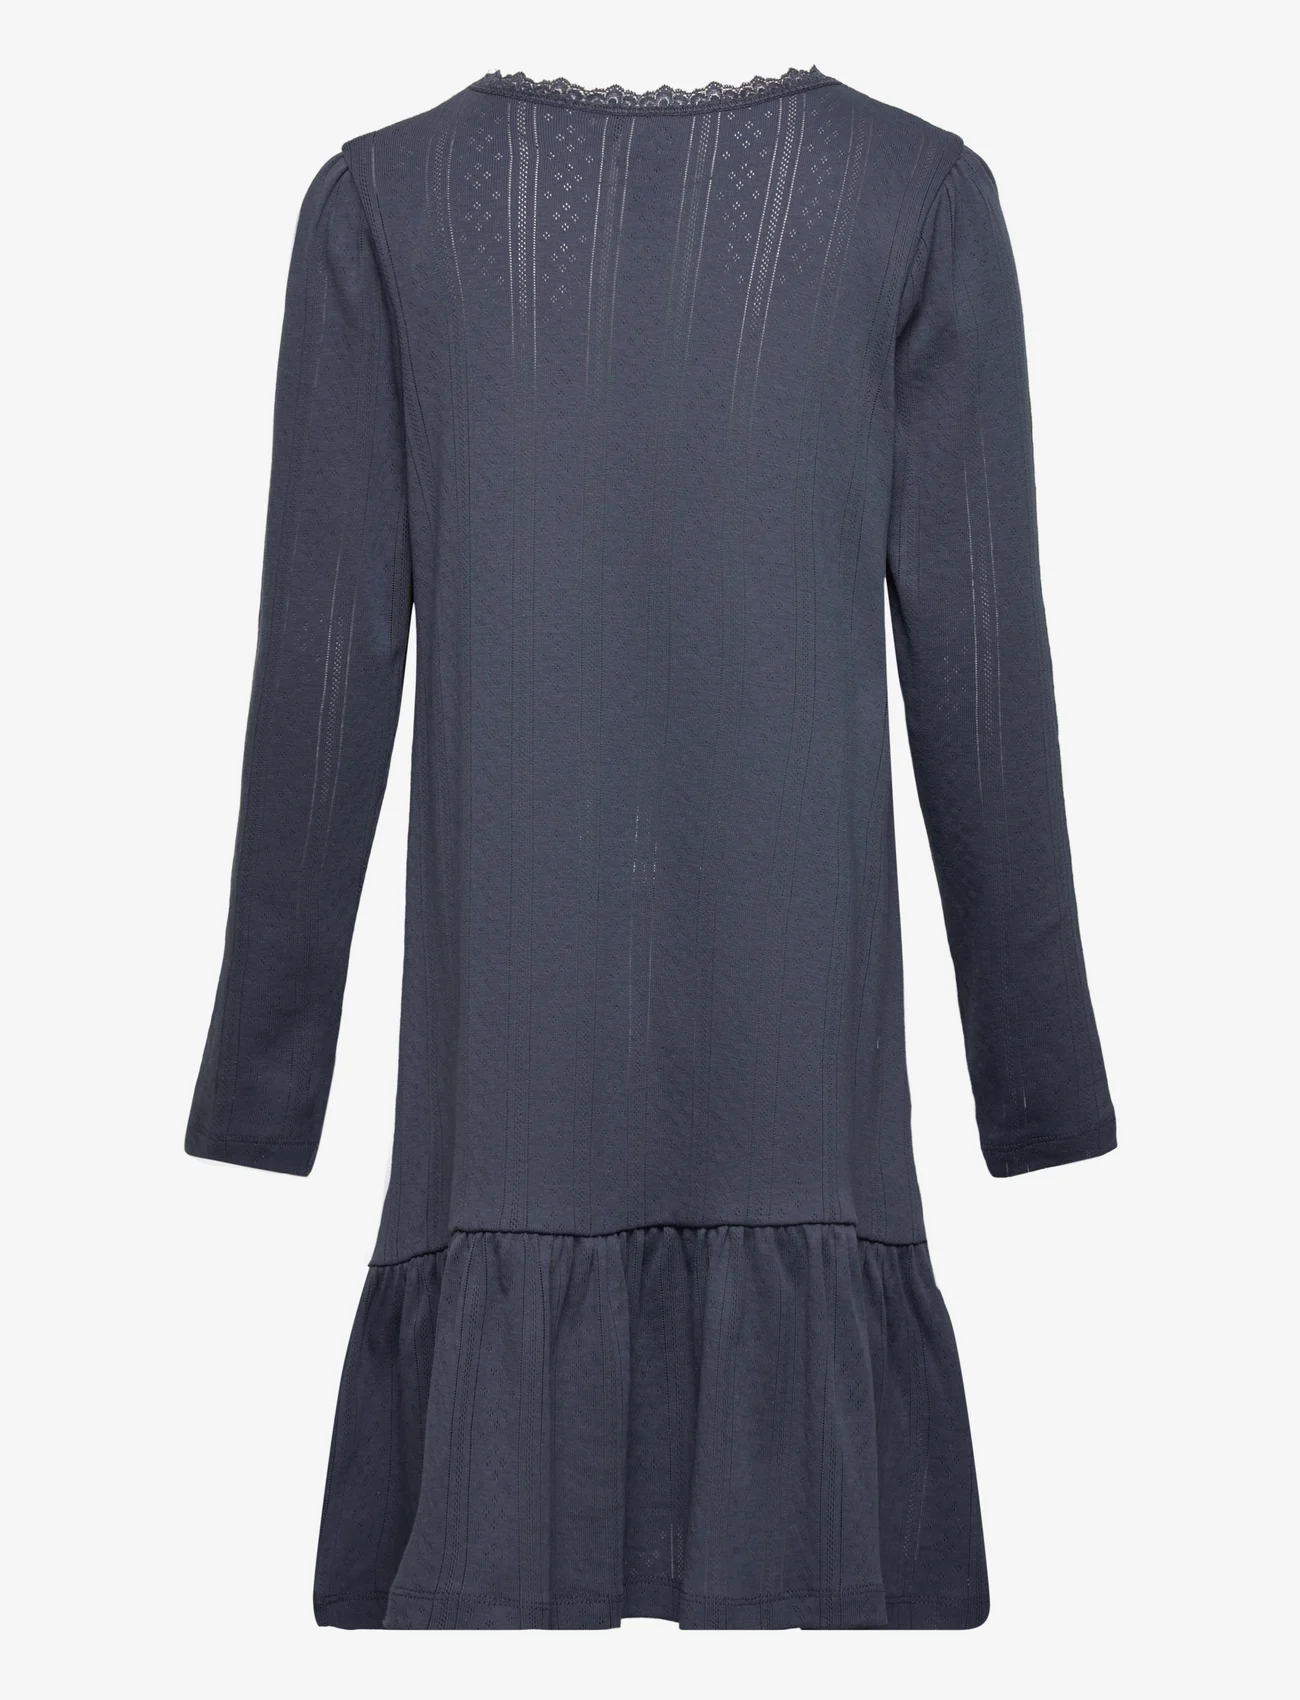 Noa Noa miniature - Dress long sleeve - pitkähihaiset - mood indigo - 1